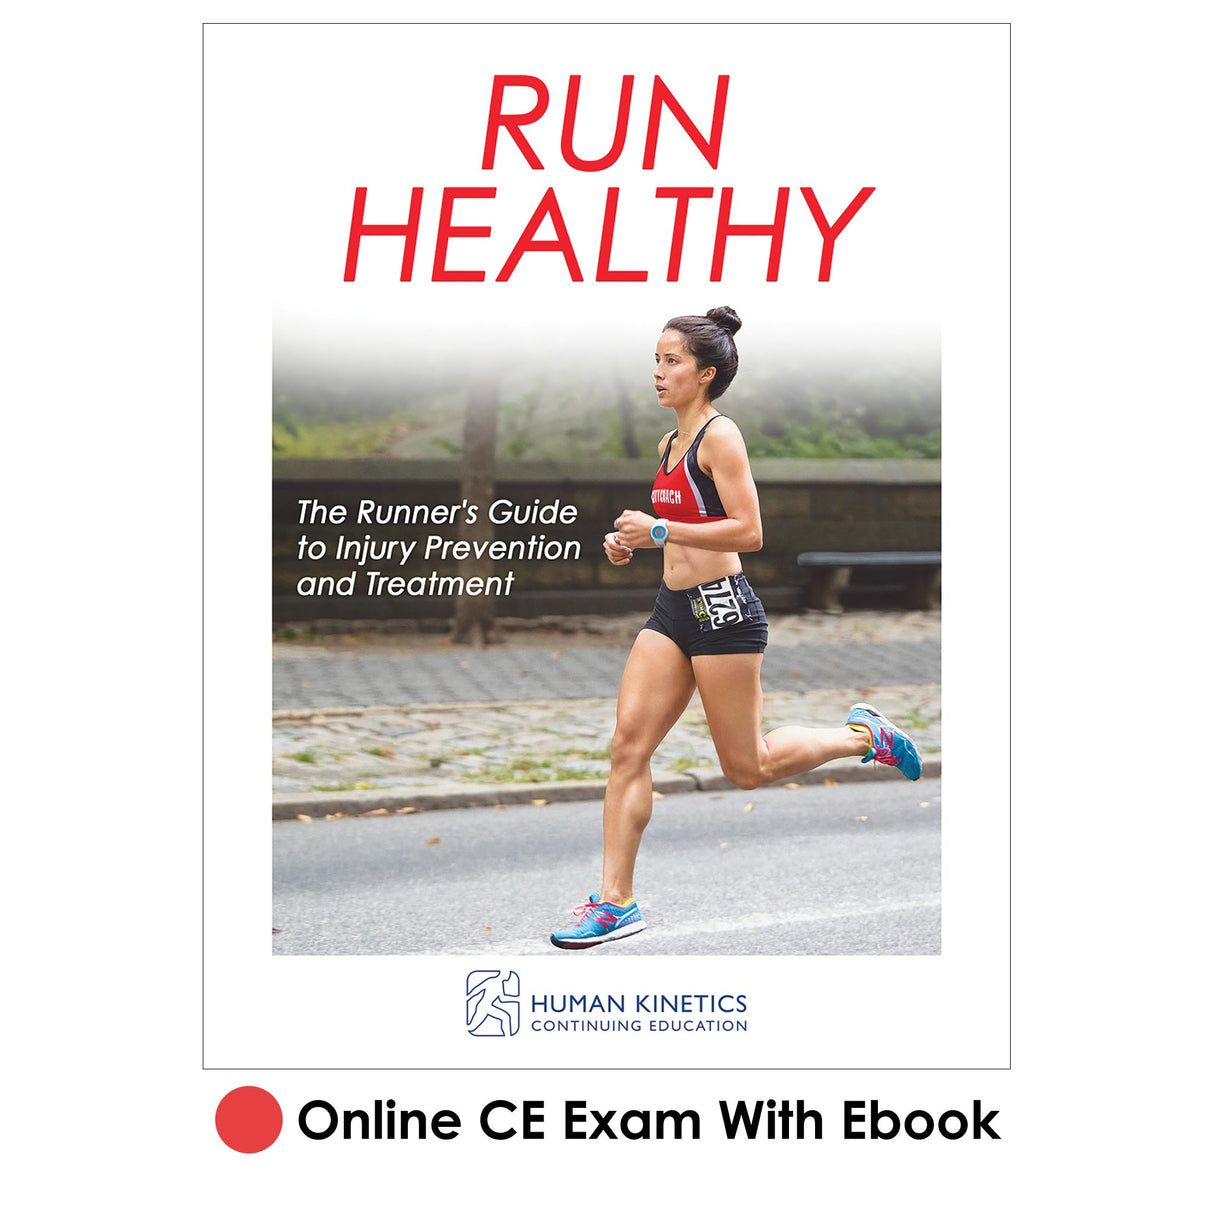 Run Healthy Online CE Exam With Ebook